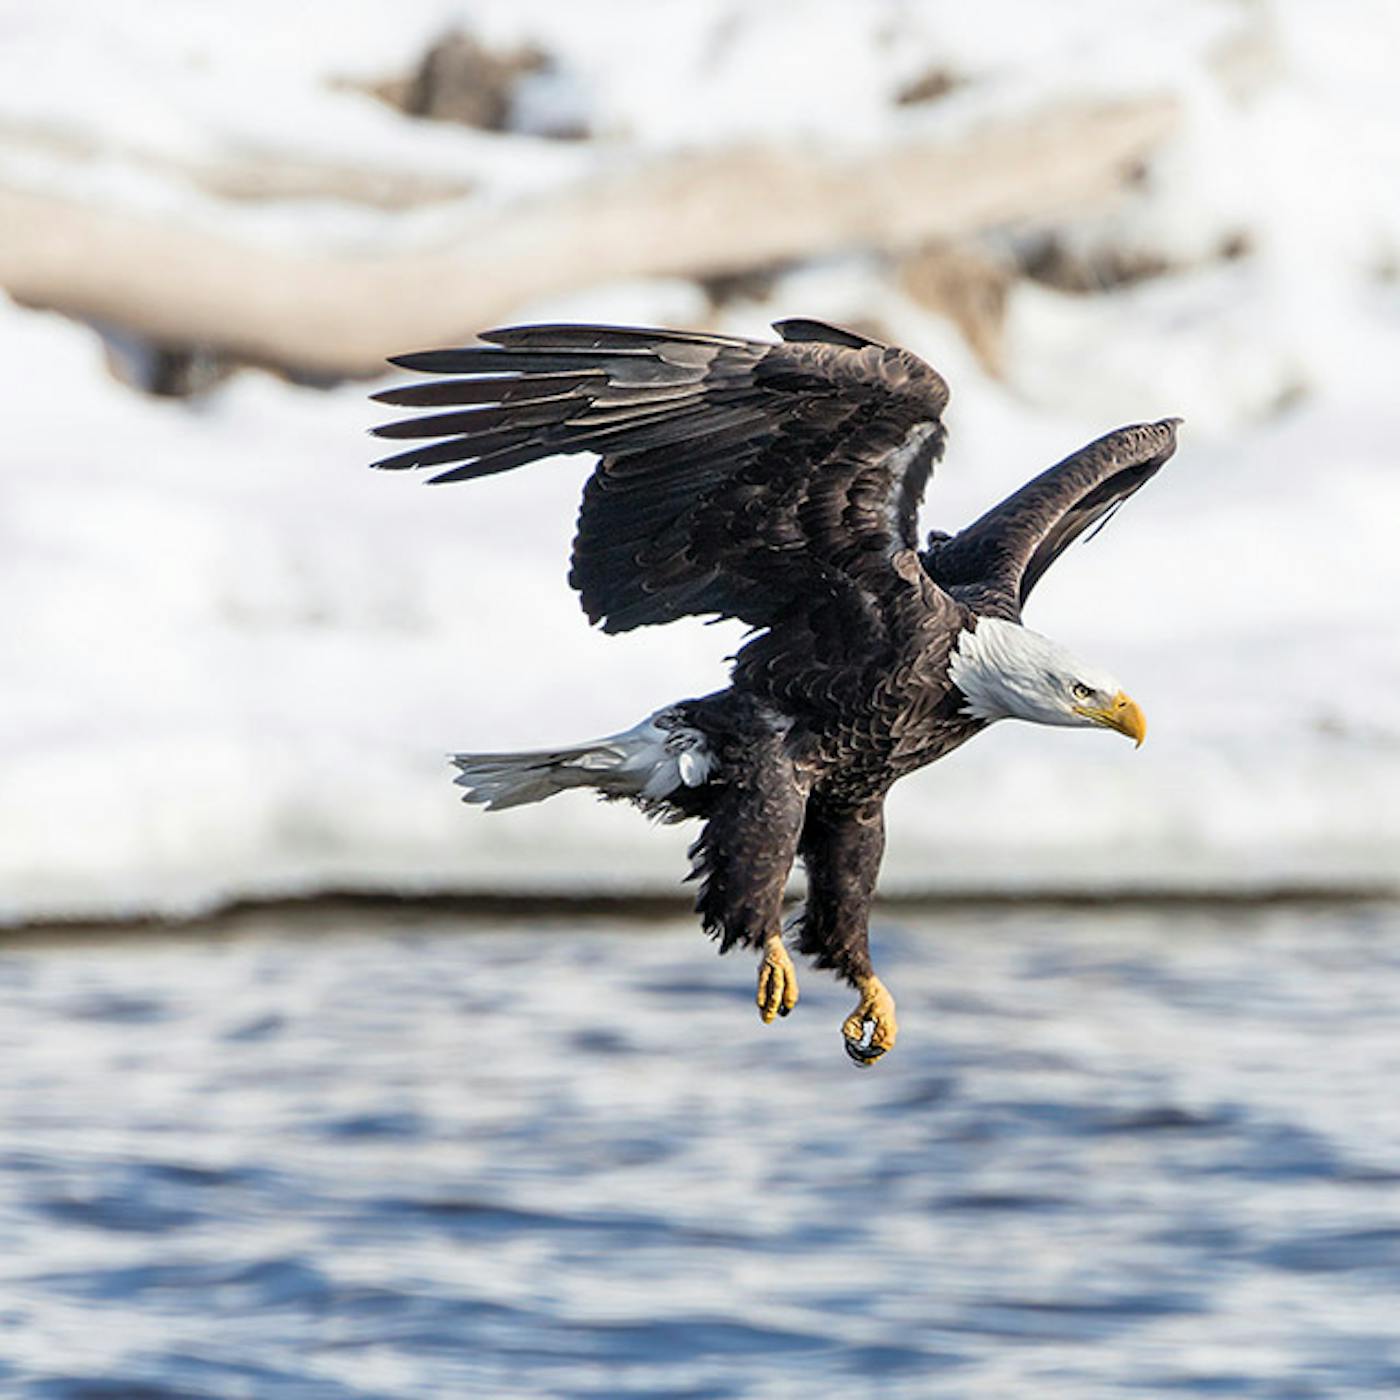 Bald eagle mid-flight in southwest Illinois (photo by Scott Evers))